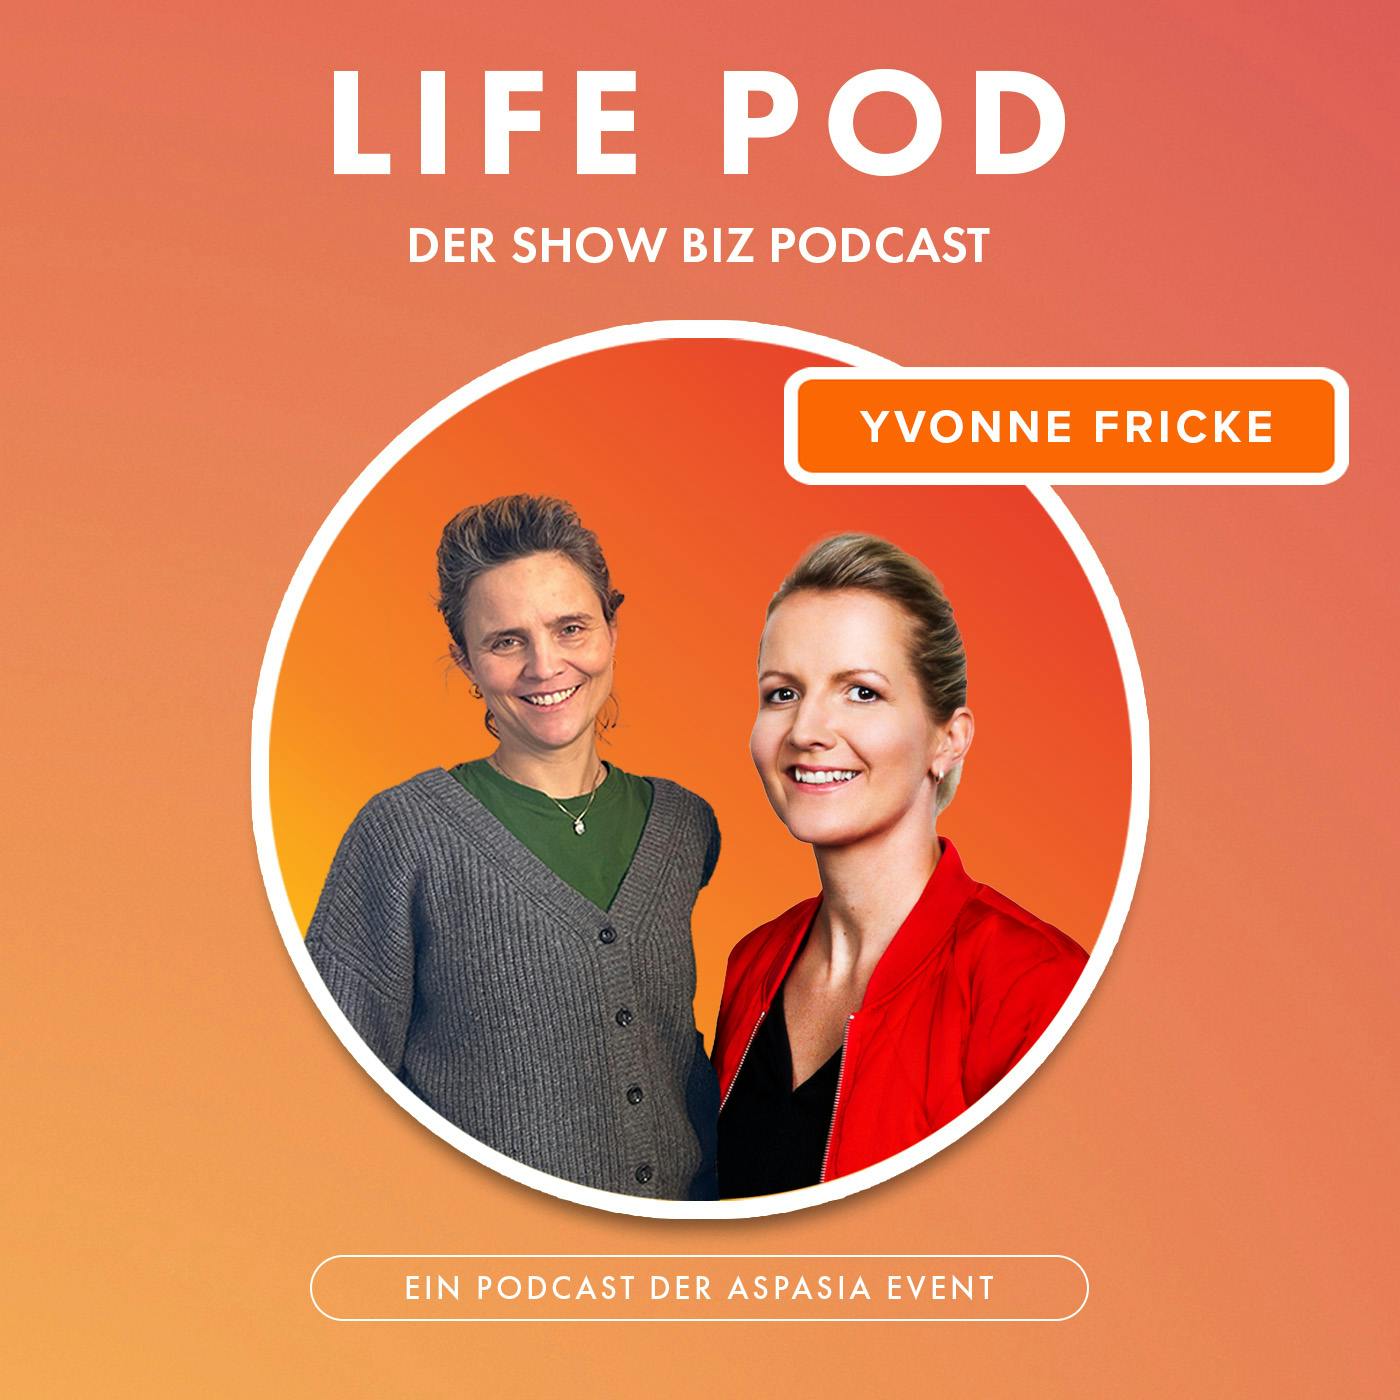 Life Pod: Yvonne Fricke